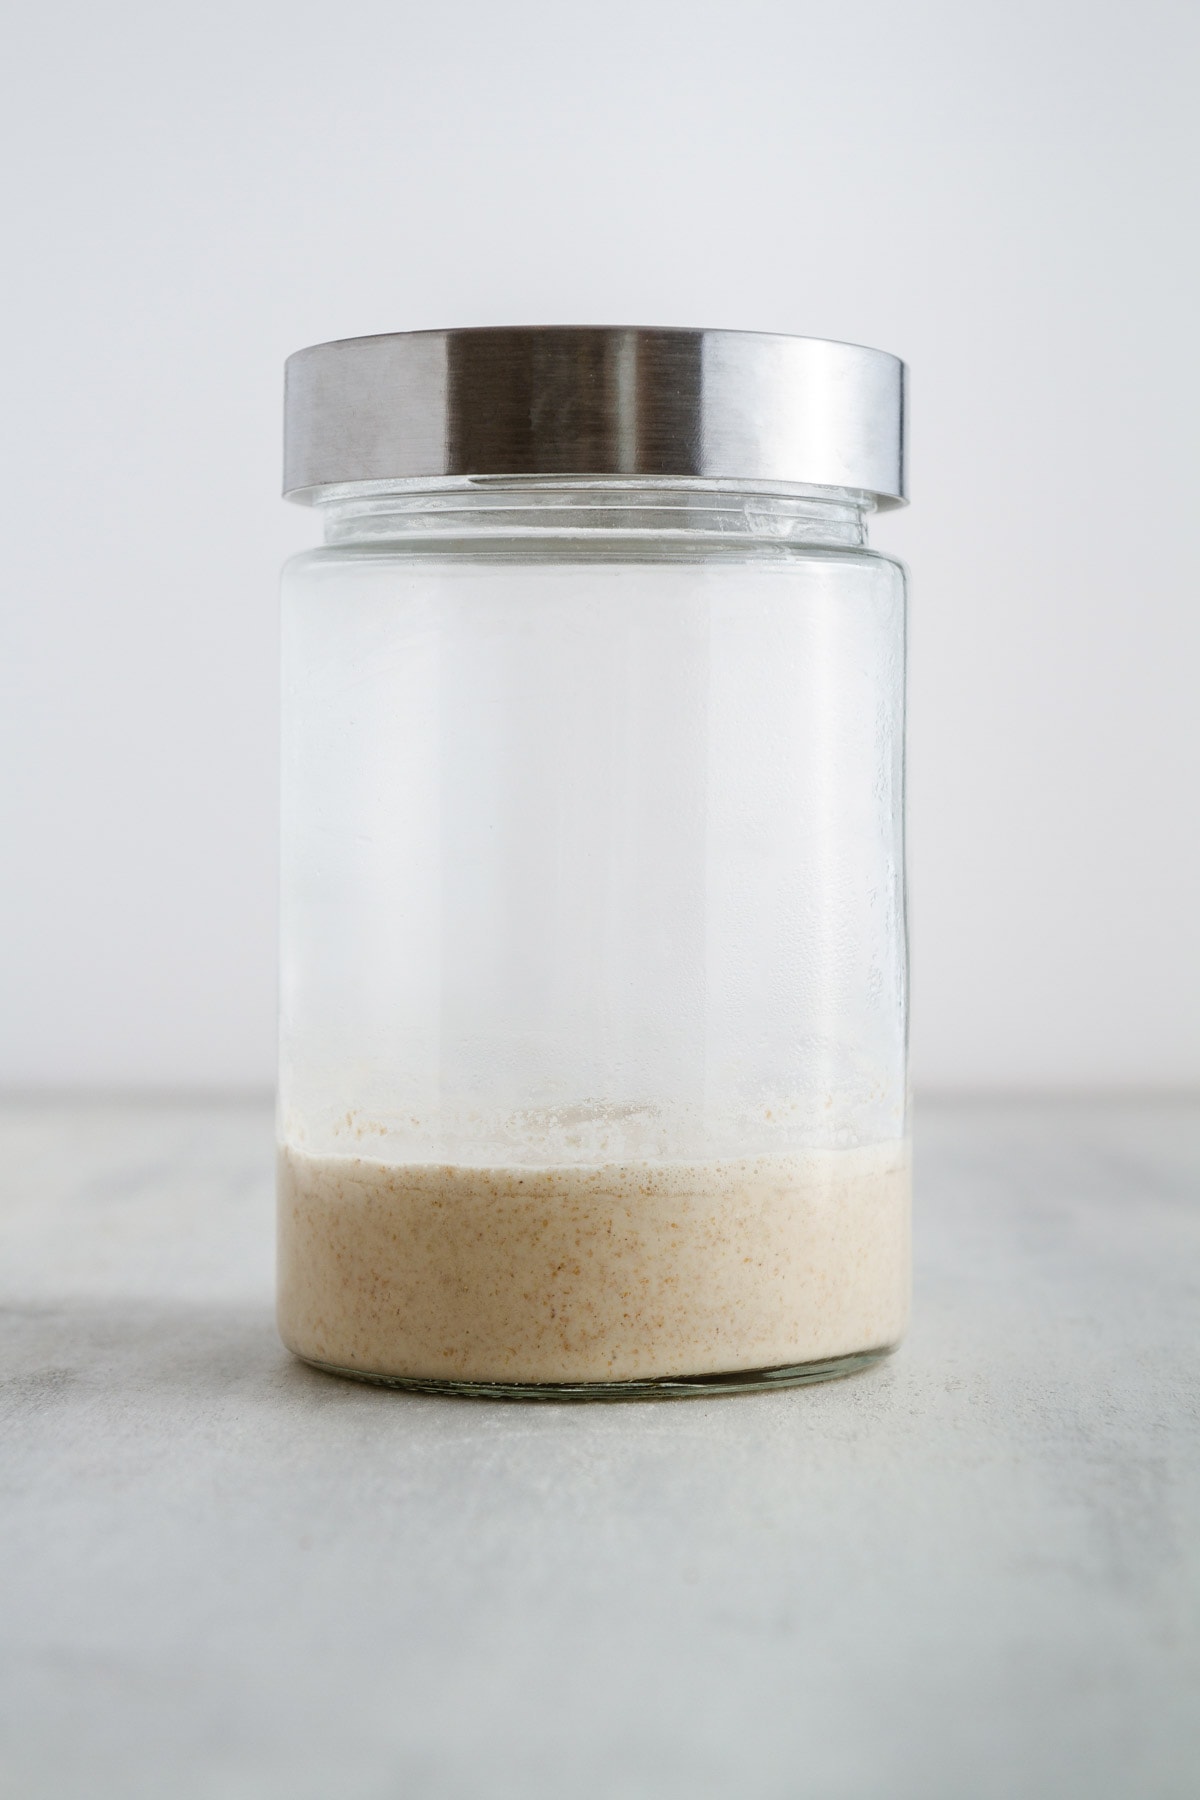 sourdough starter in a jar